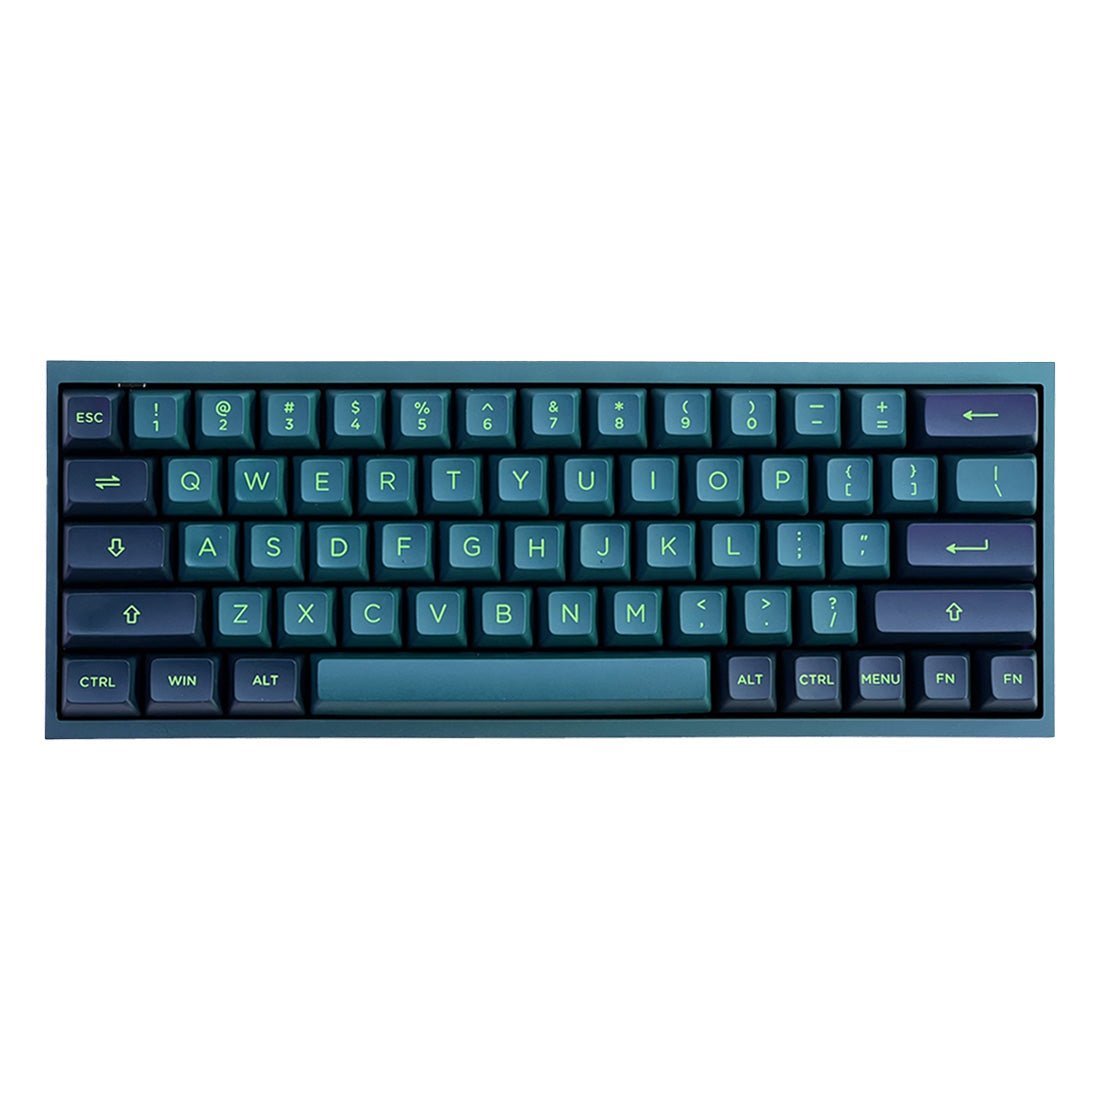 (Pre-Owned) Pre-Build Wired Gaming Keyboard - Green - لوحة مفاتيح مجهزة مستعملة - Store 974 | ستور ٩٧٤